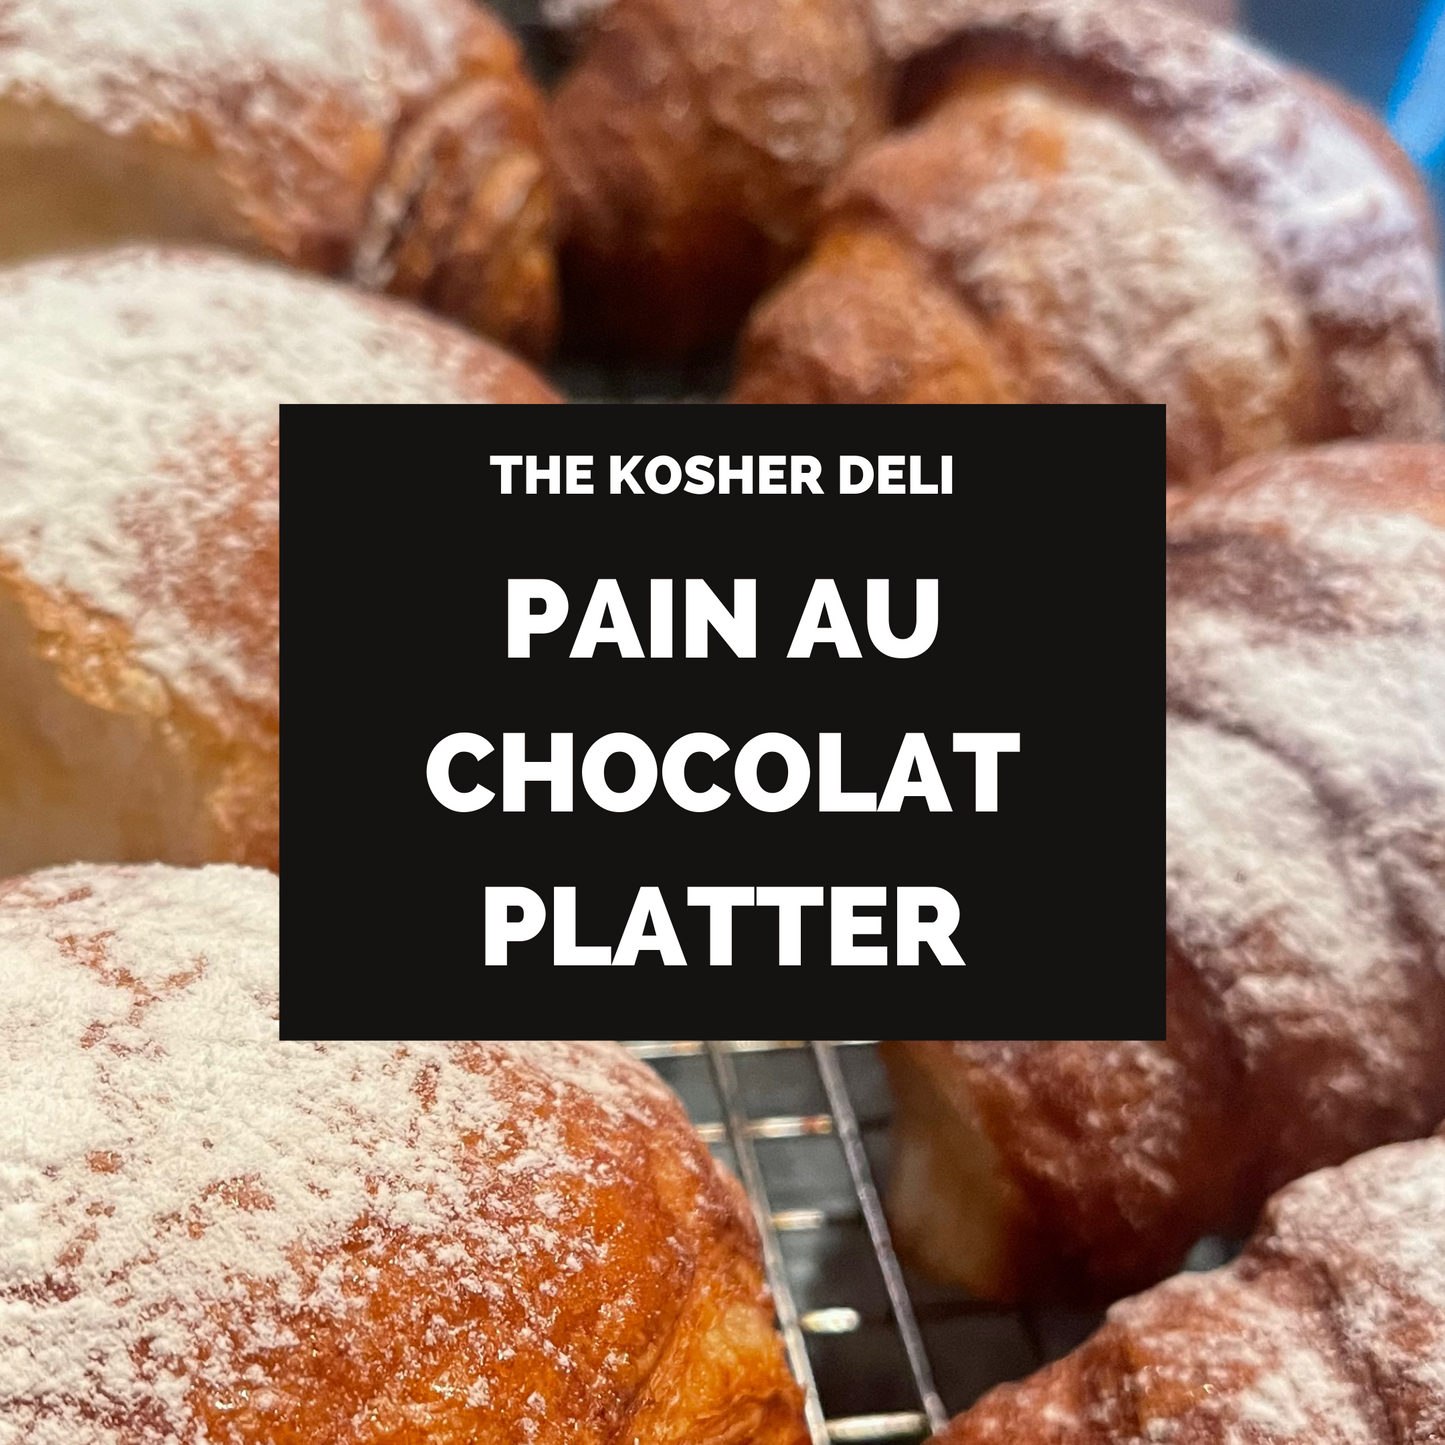 Pain au Chocolat platter - serves 12 people